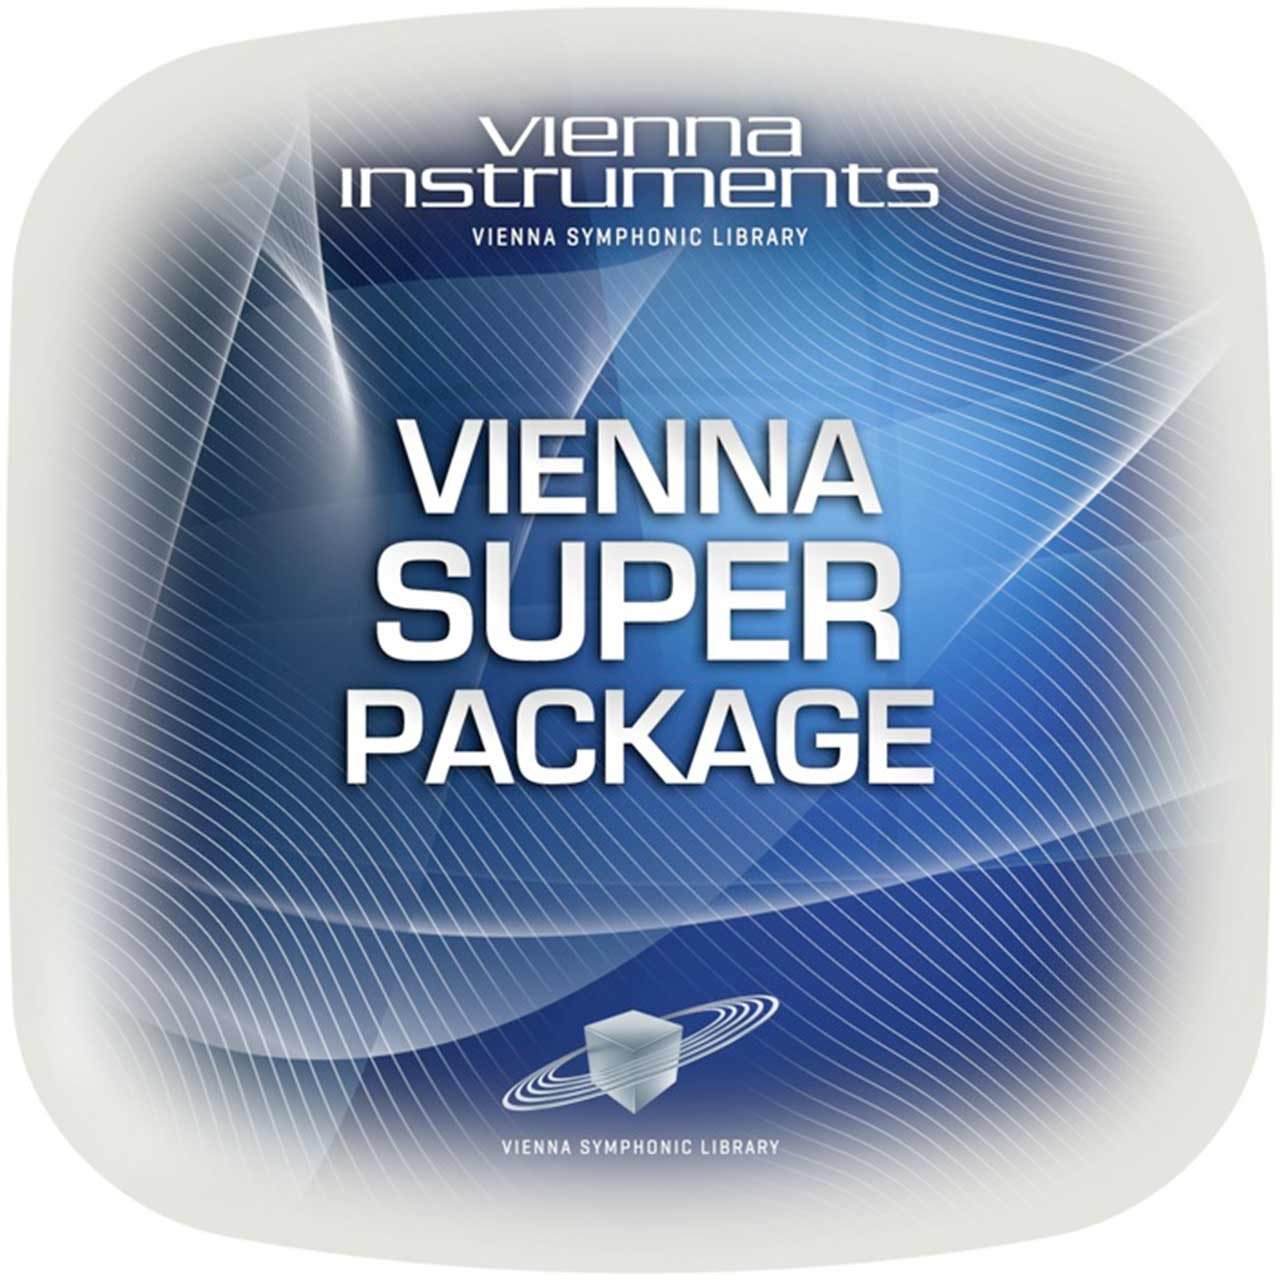 Software Bundles - Vienna Symphonic Library VSL - VIENNA SUPER PACKAGE